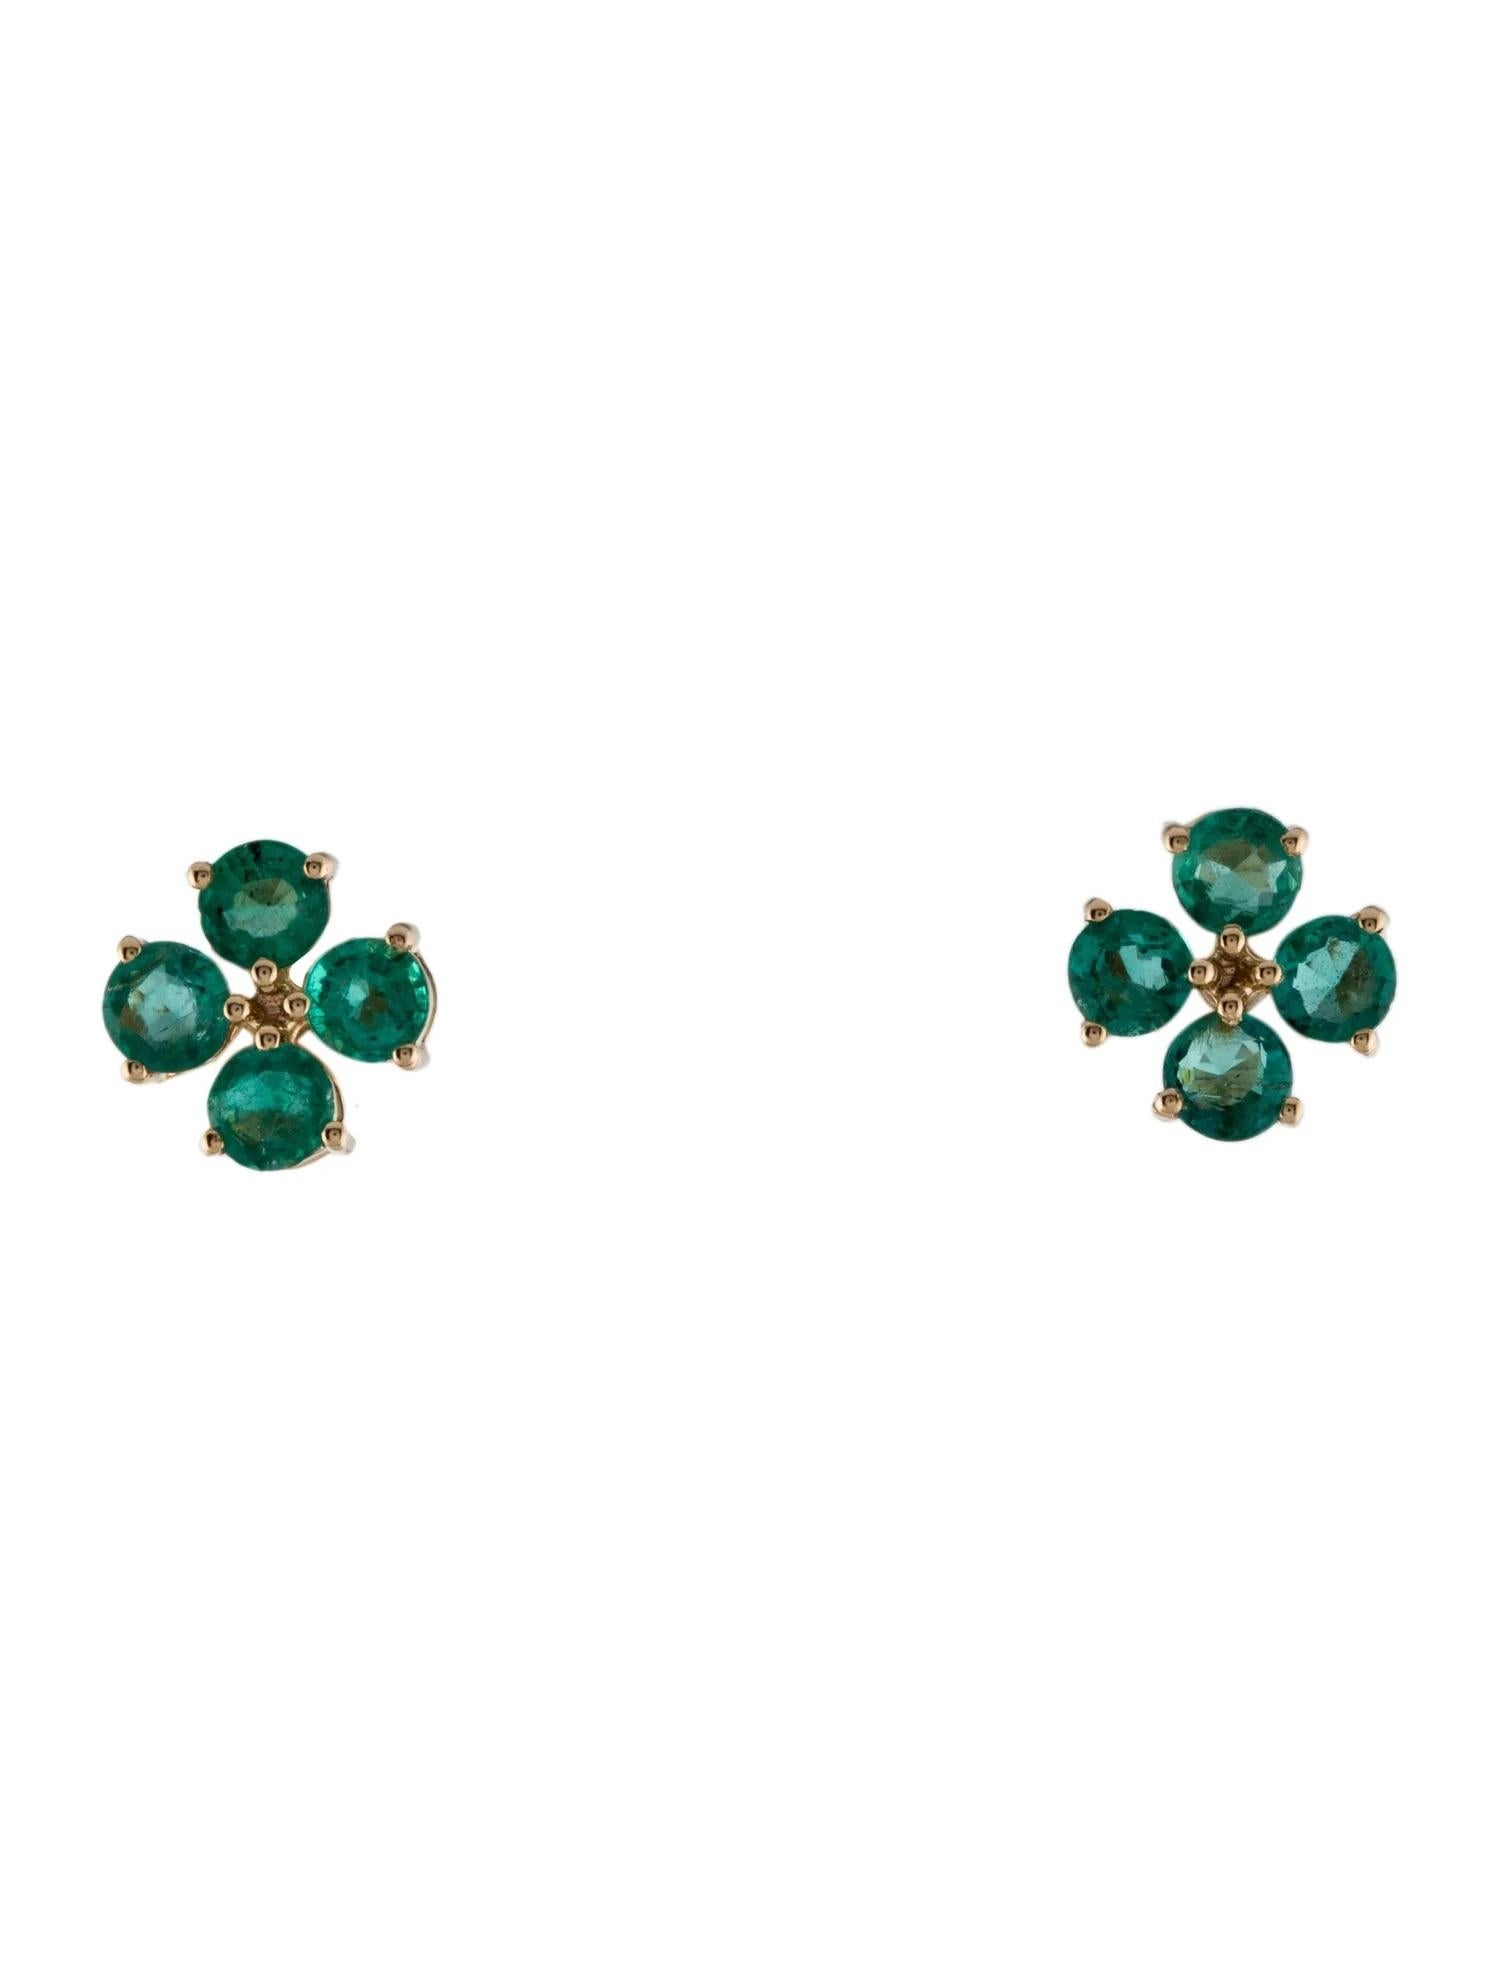 Emerald Cut 14K Emerald Stud Earrings  1.97 Carat Round Faceted Gemstones  Maker's Mark For Sale